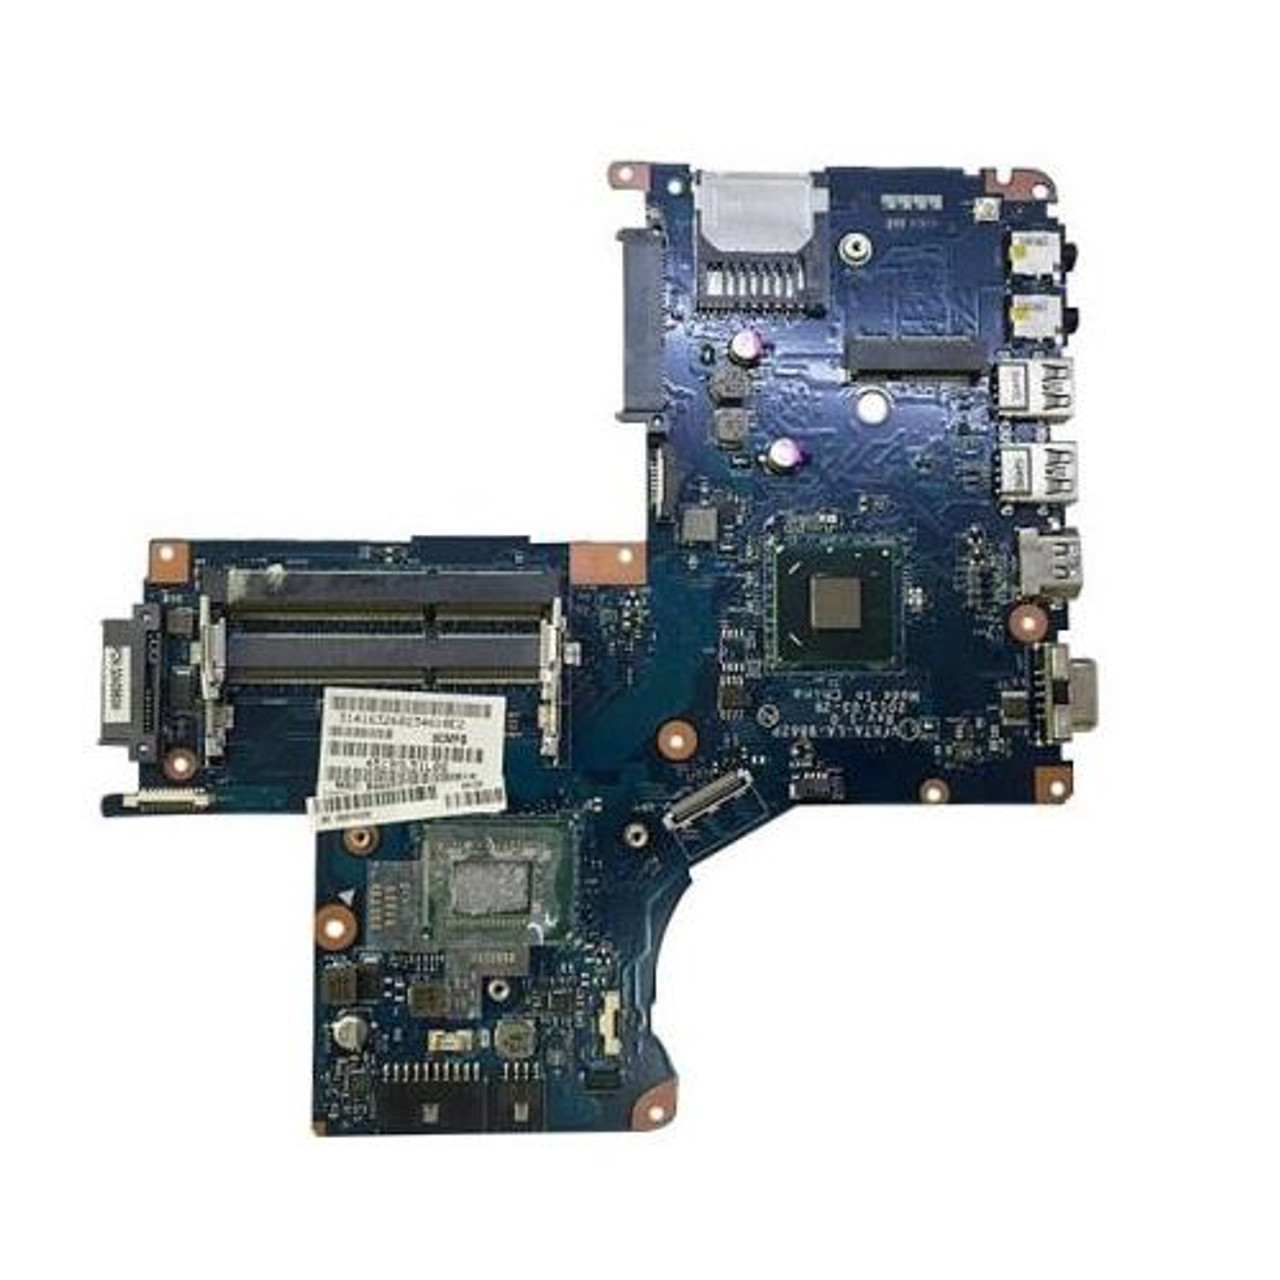 Betuttelen Dan Vader K000141230 Toshiba System Board with Intel i5-3337u 1.8GHz CPU for  Satellite L45T (Refurbished)